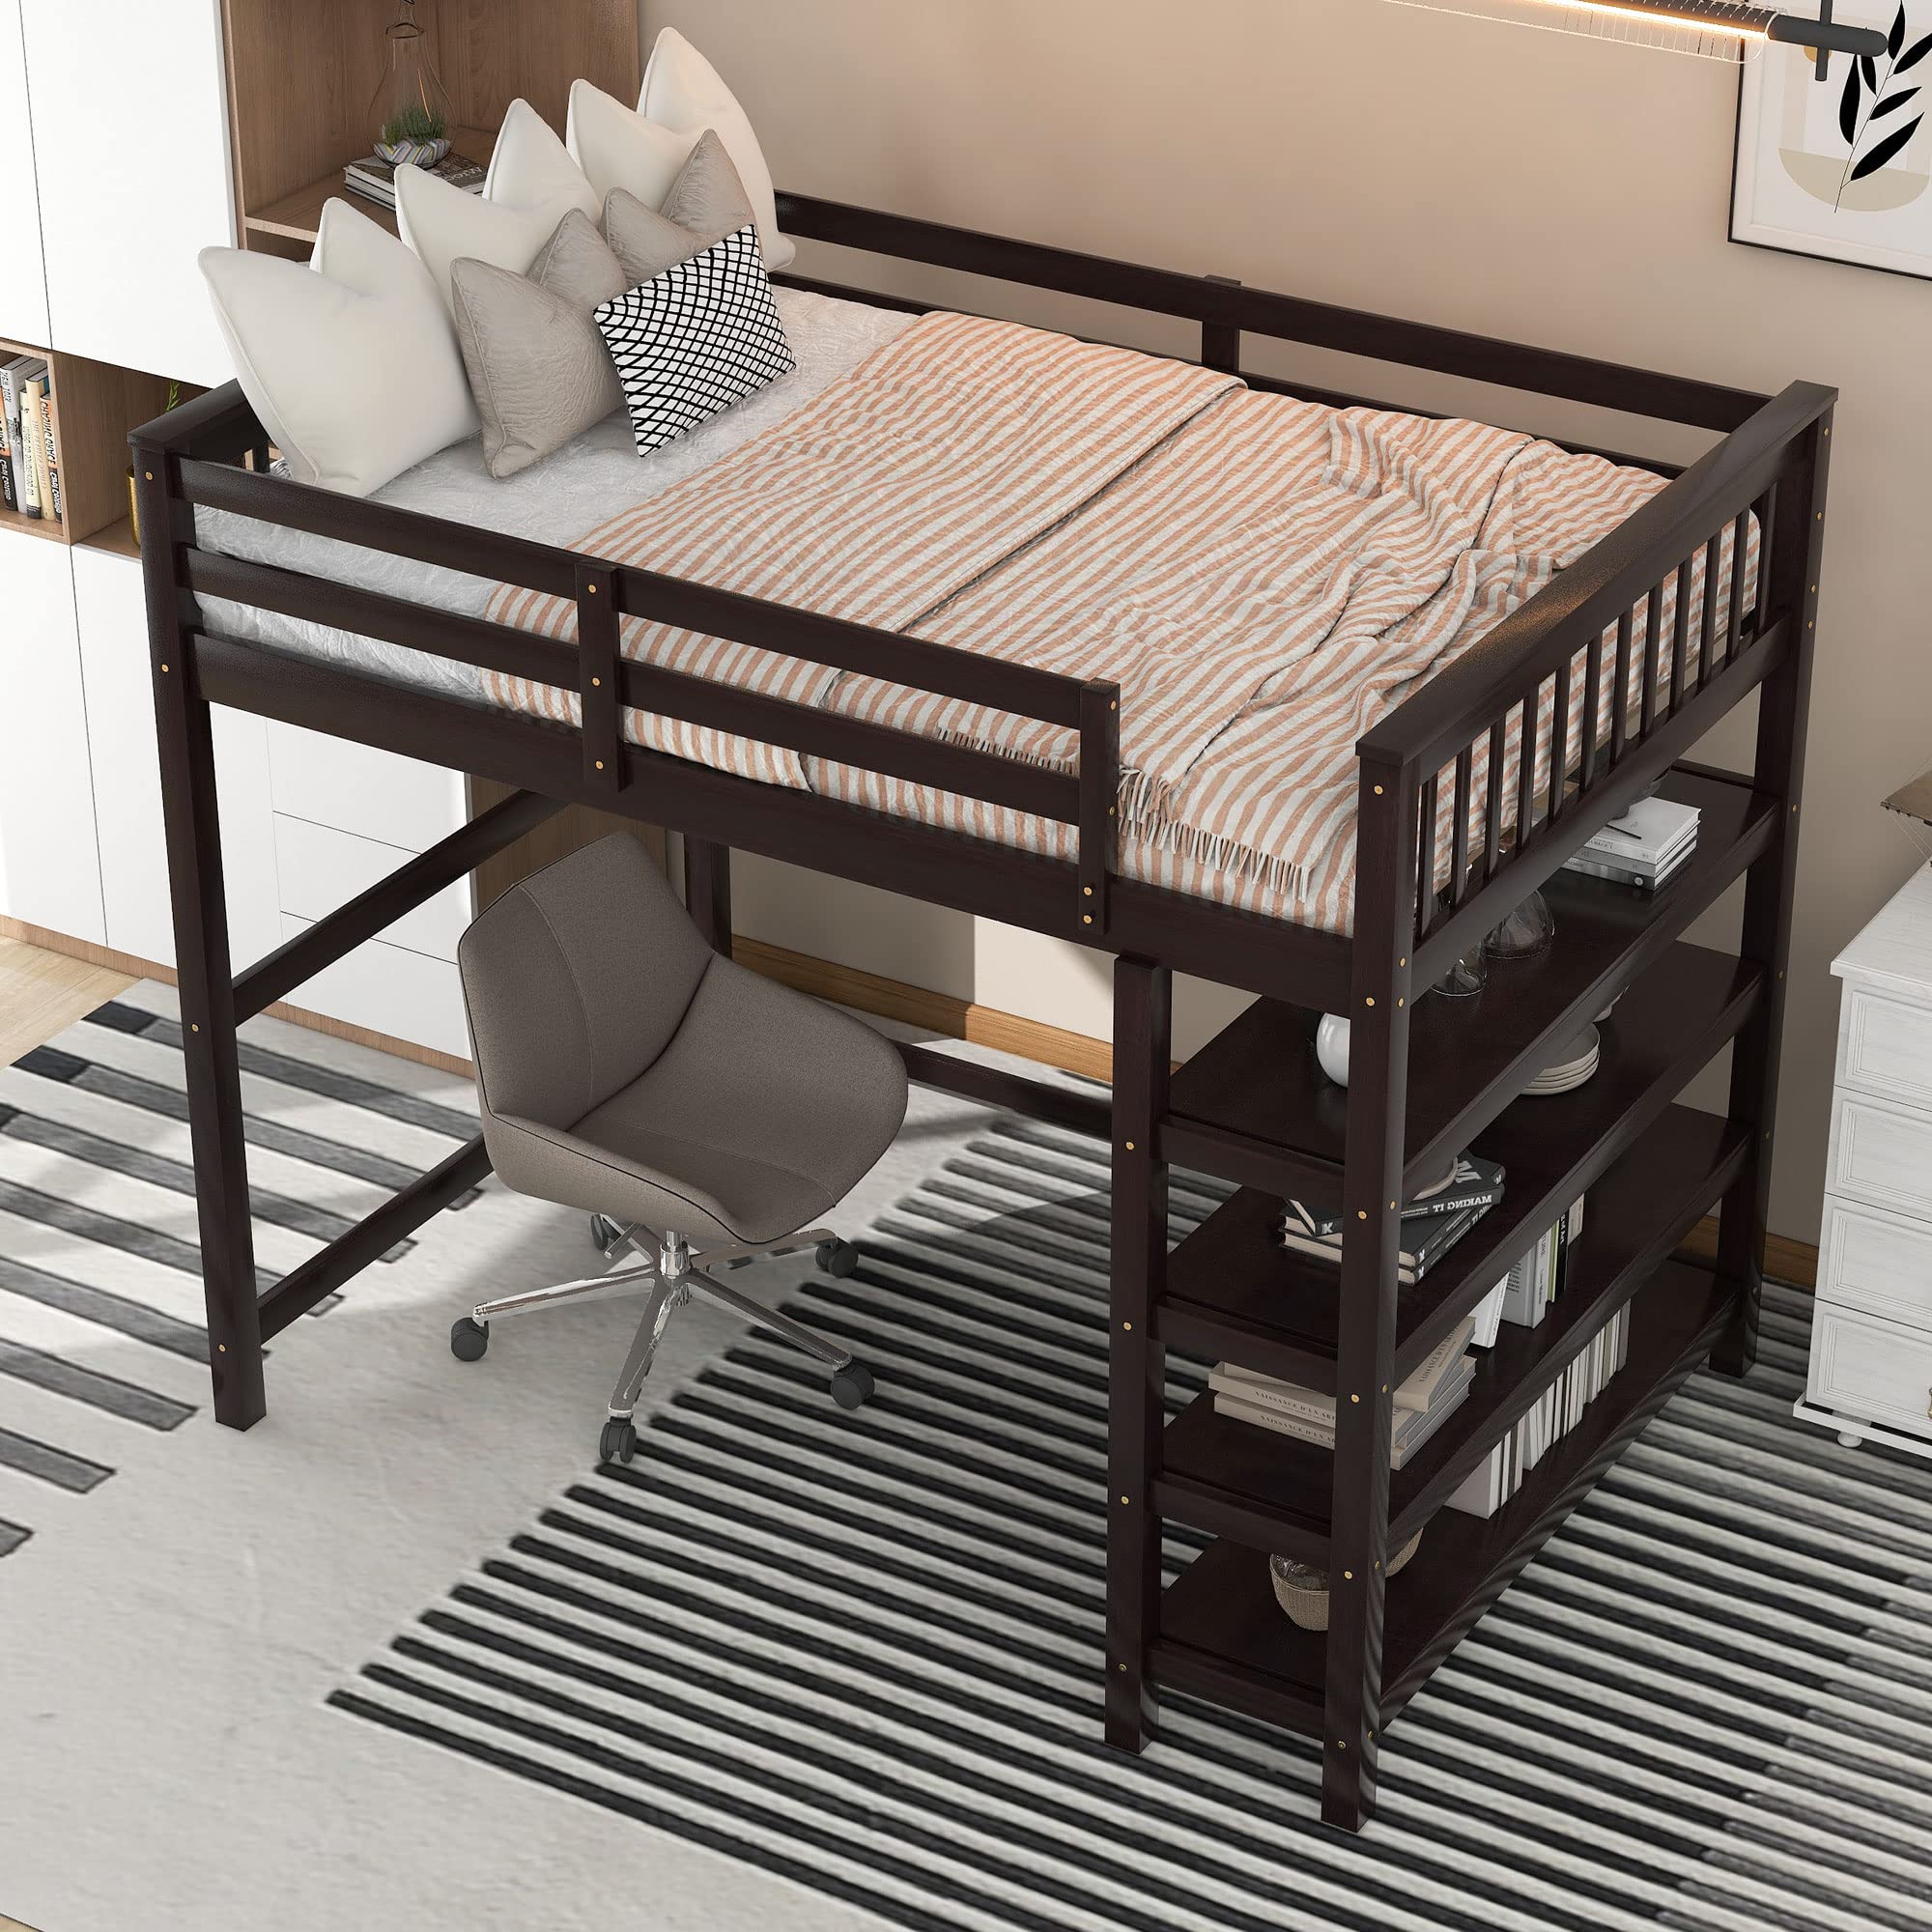 Merax Wood Loft Bed with Desk and Shelves : Twin Size Loft Bed with Storage Shelves and Under-Bed Desk, Twin Loft Bed,Espresso